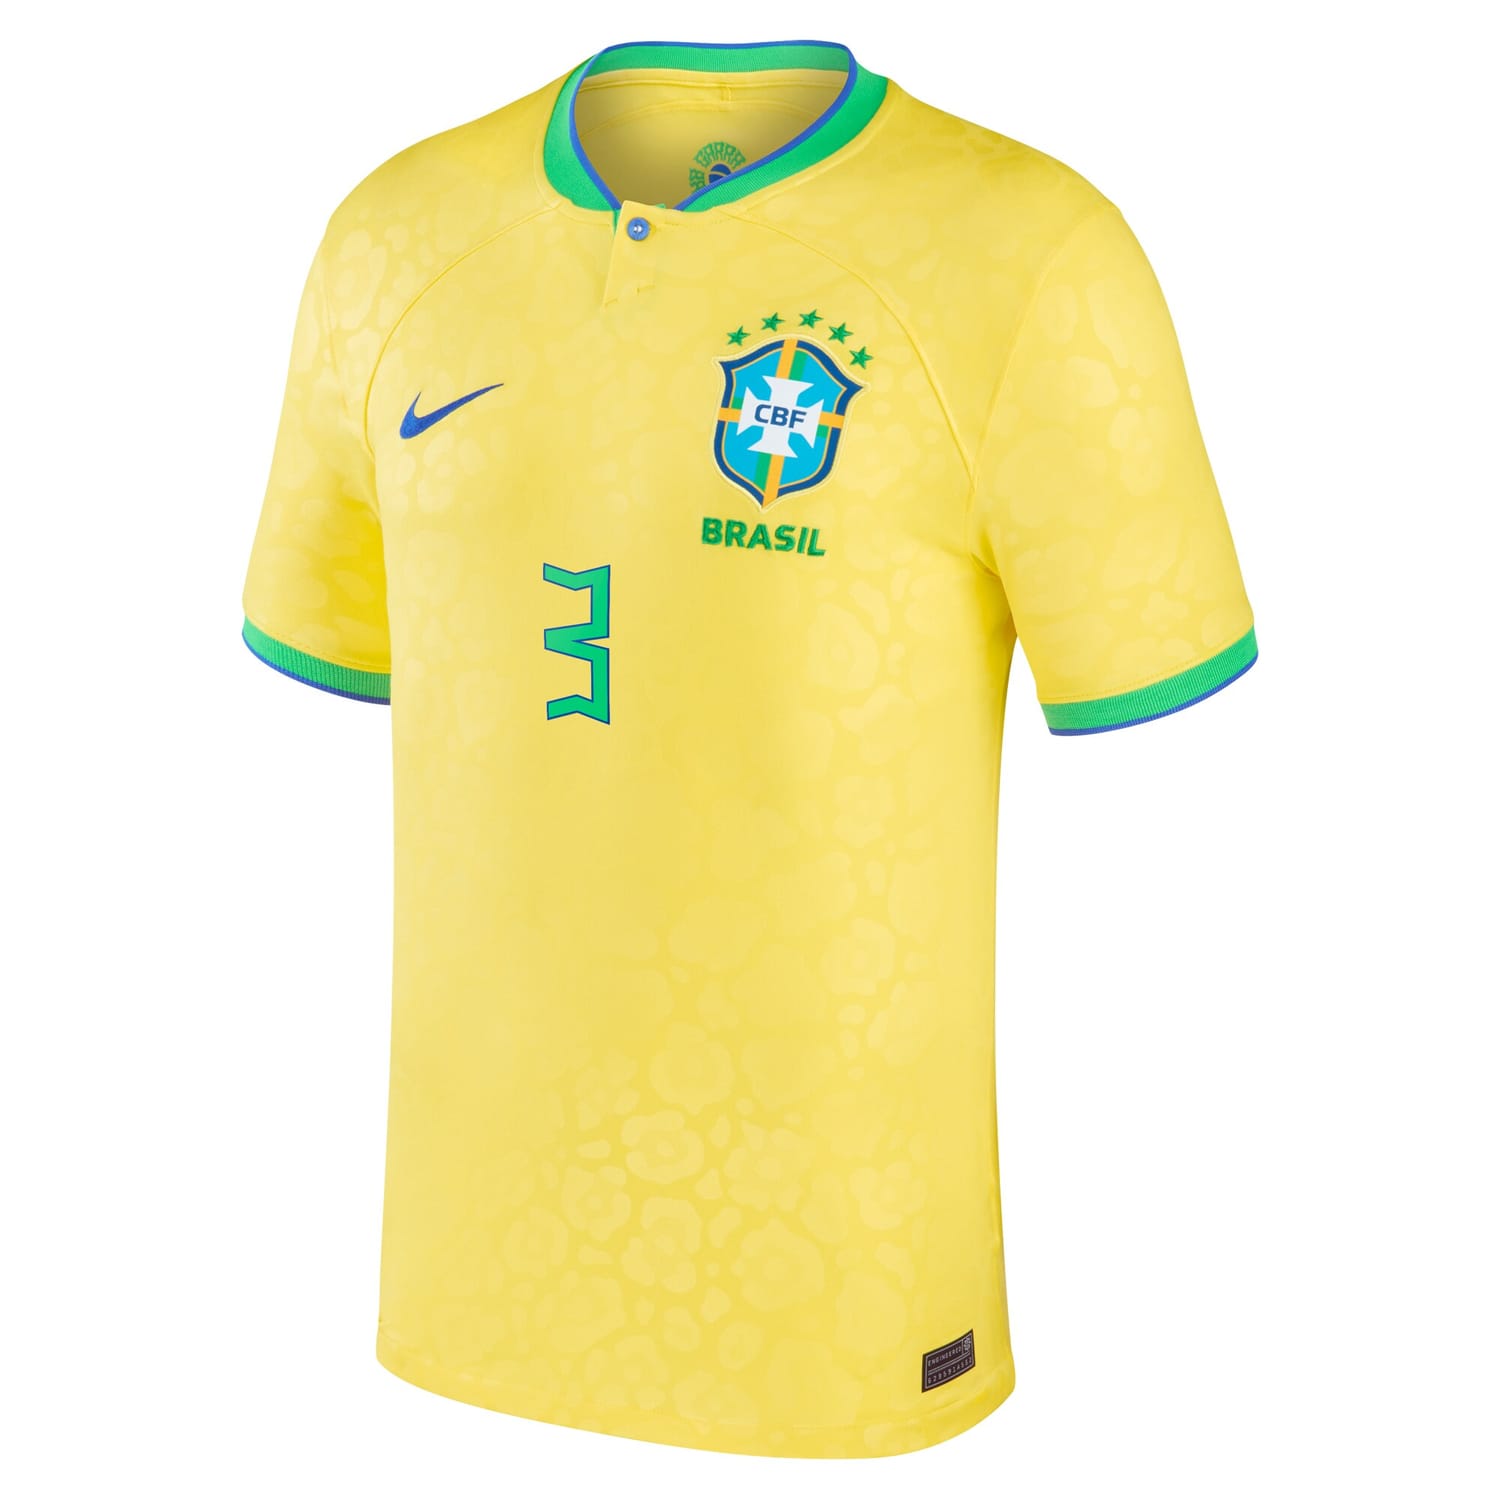 Brazil National Team Home Jersey Shirt Yellow 2022-23 player Thiago Silva printing for Men